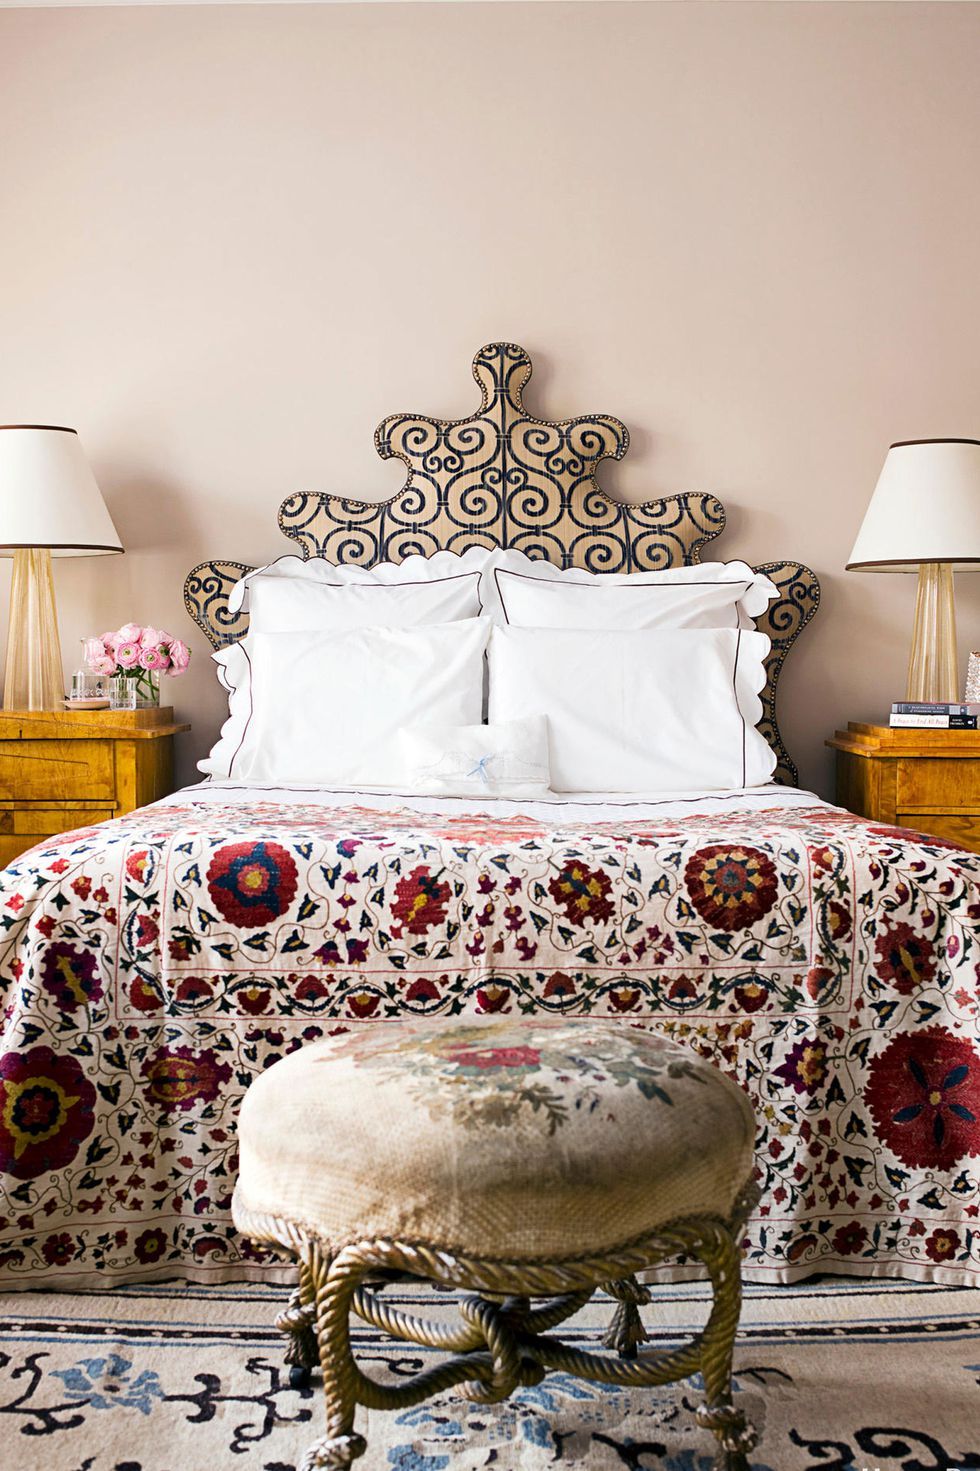 100 Colorful Bedroom Design Ideas - DigsDigs